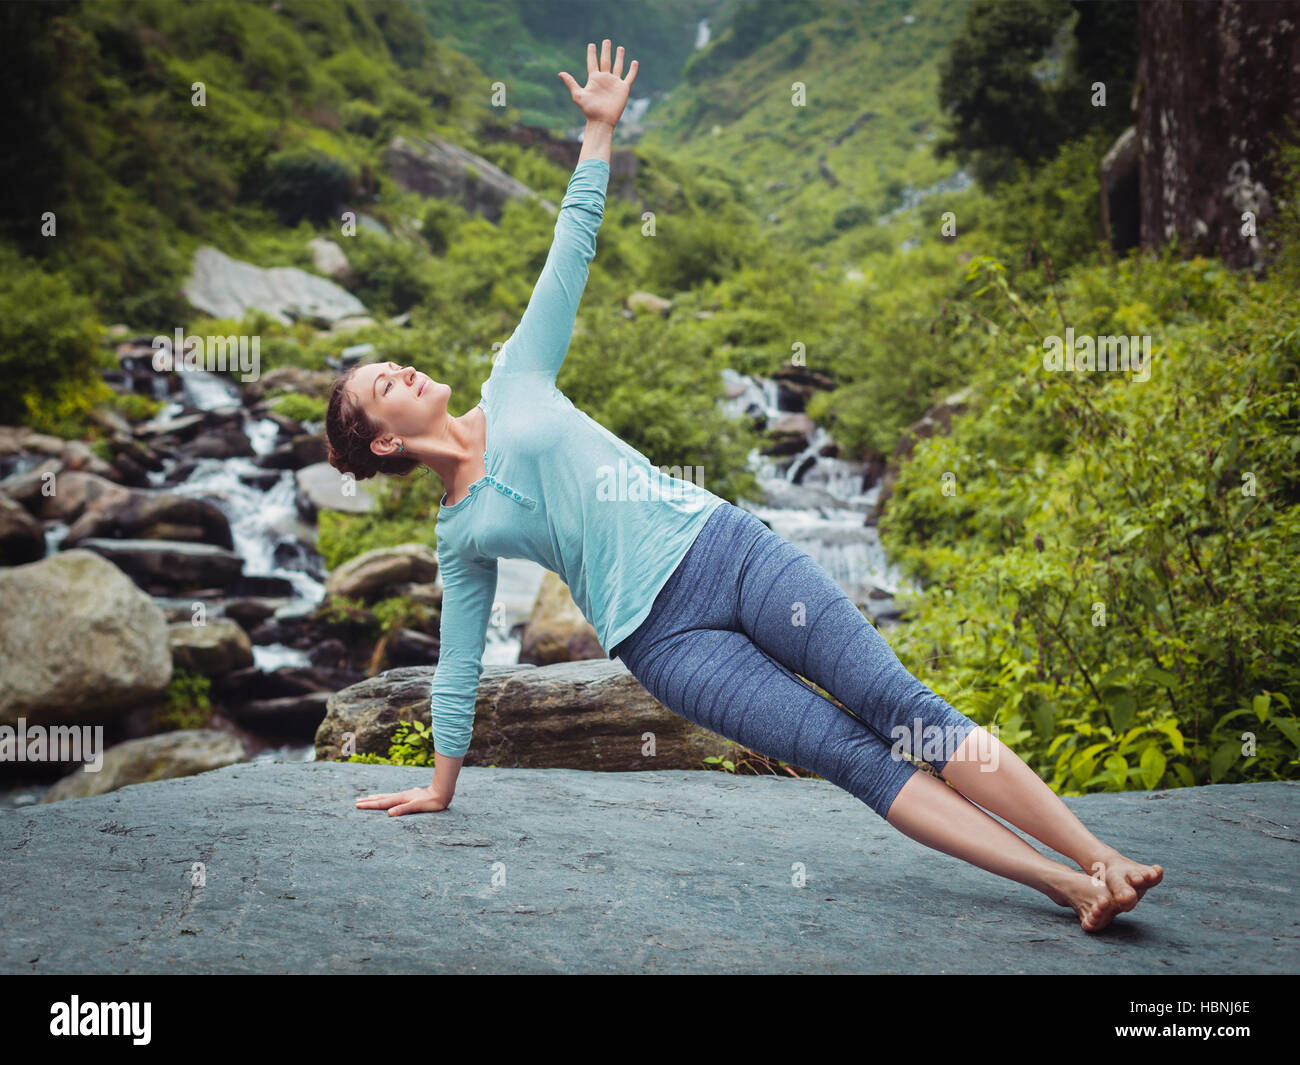 Woman doing yoga asana Vasisthasana - side plank pose outdoors Stock Photo